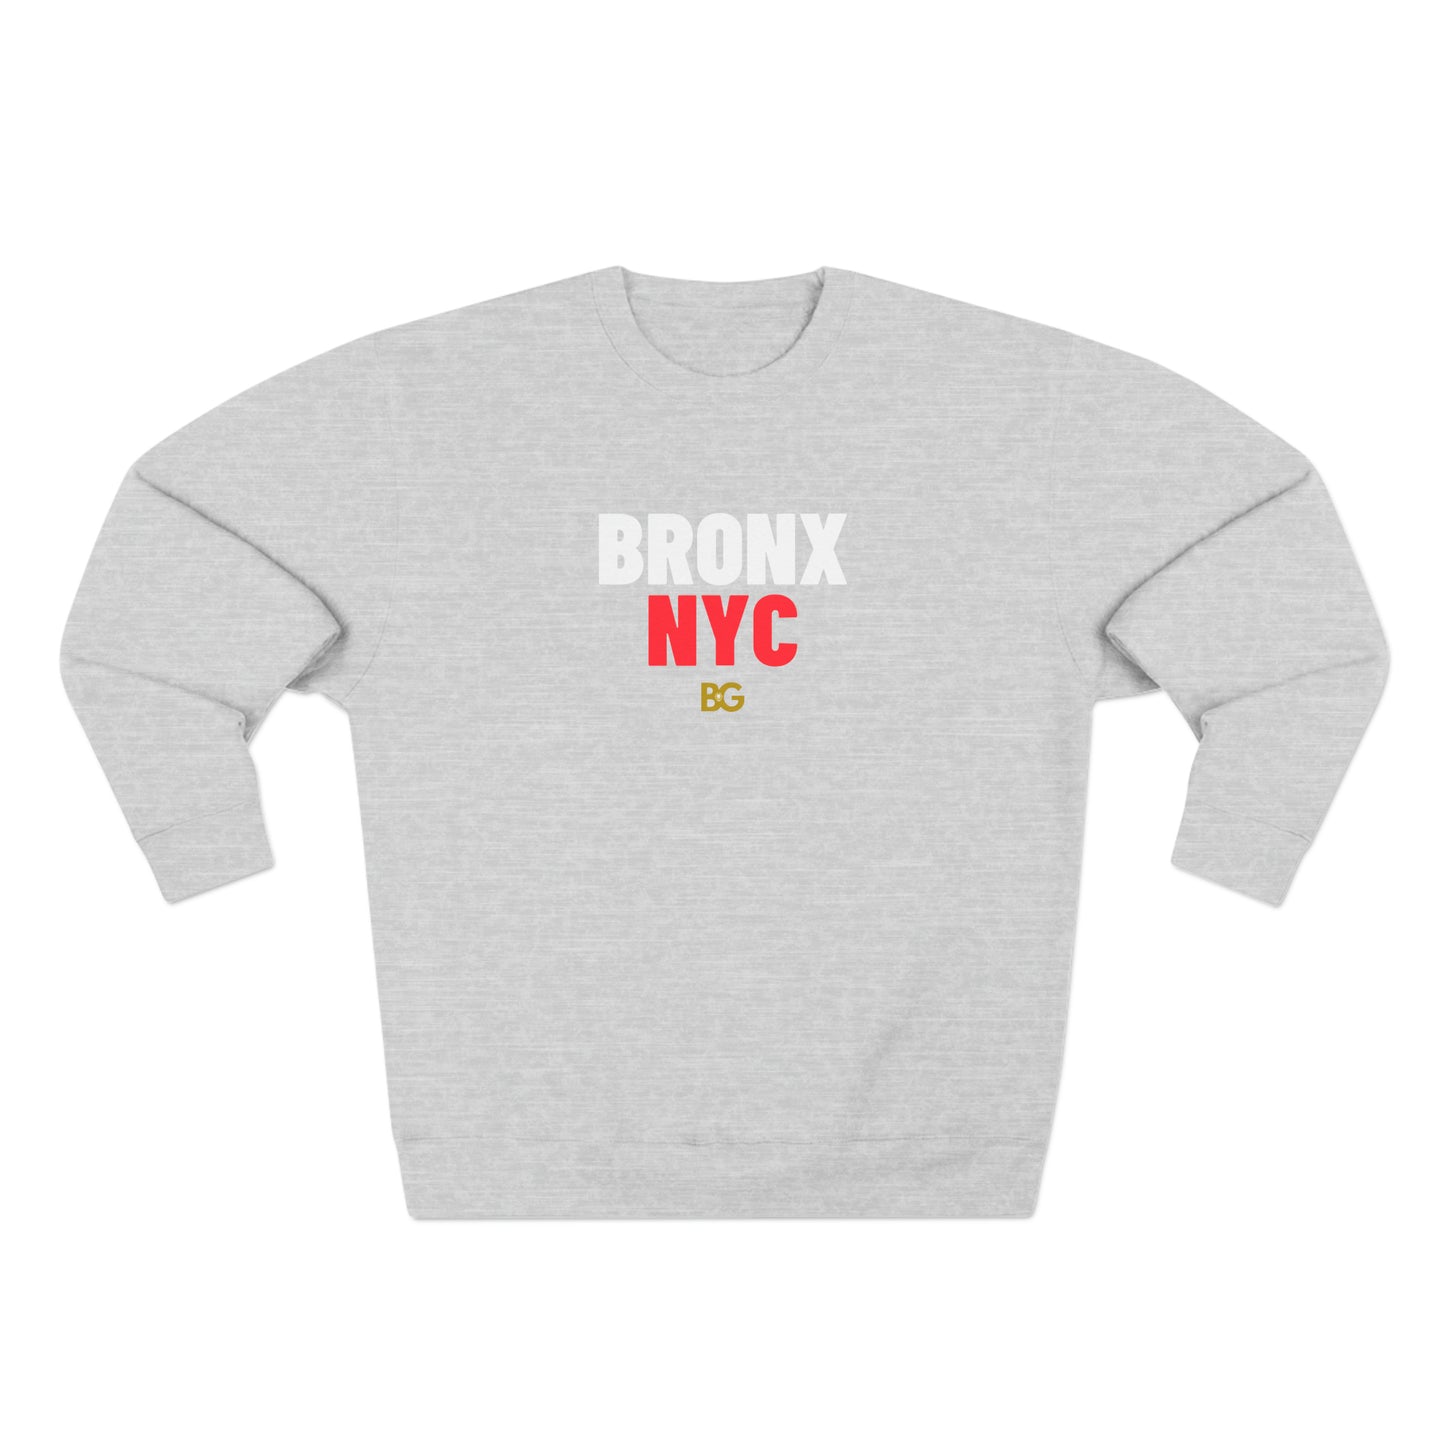 BG "Bronx NYC" Premium Crewneck Sweatshirt